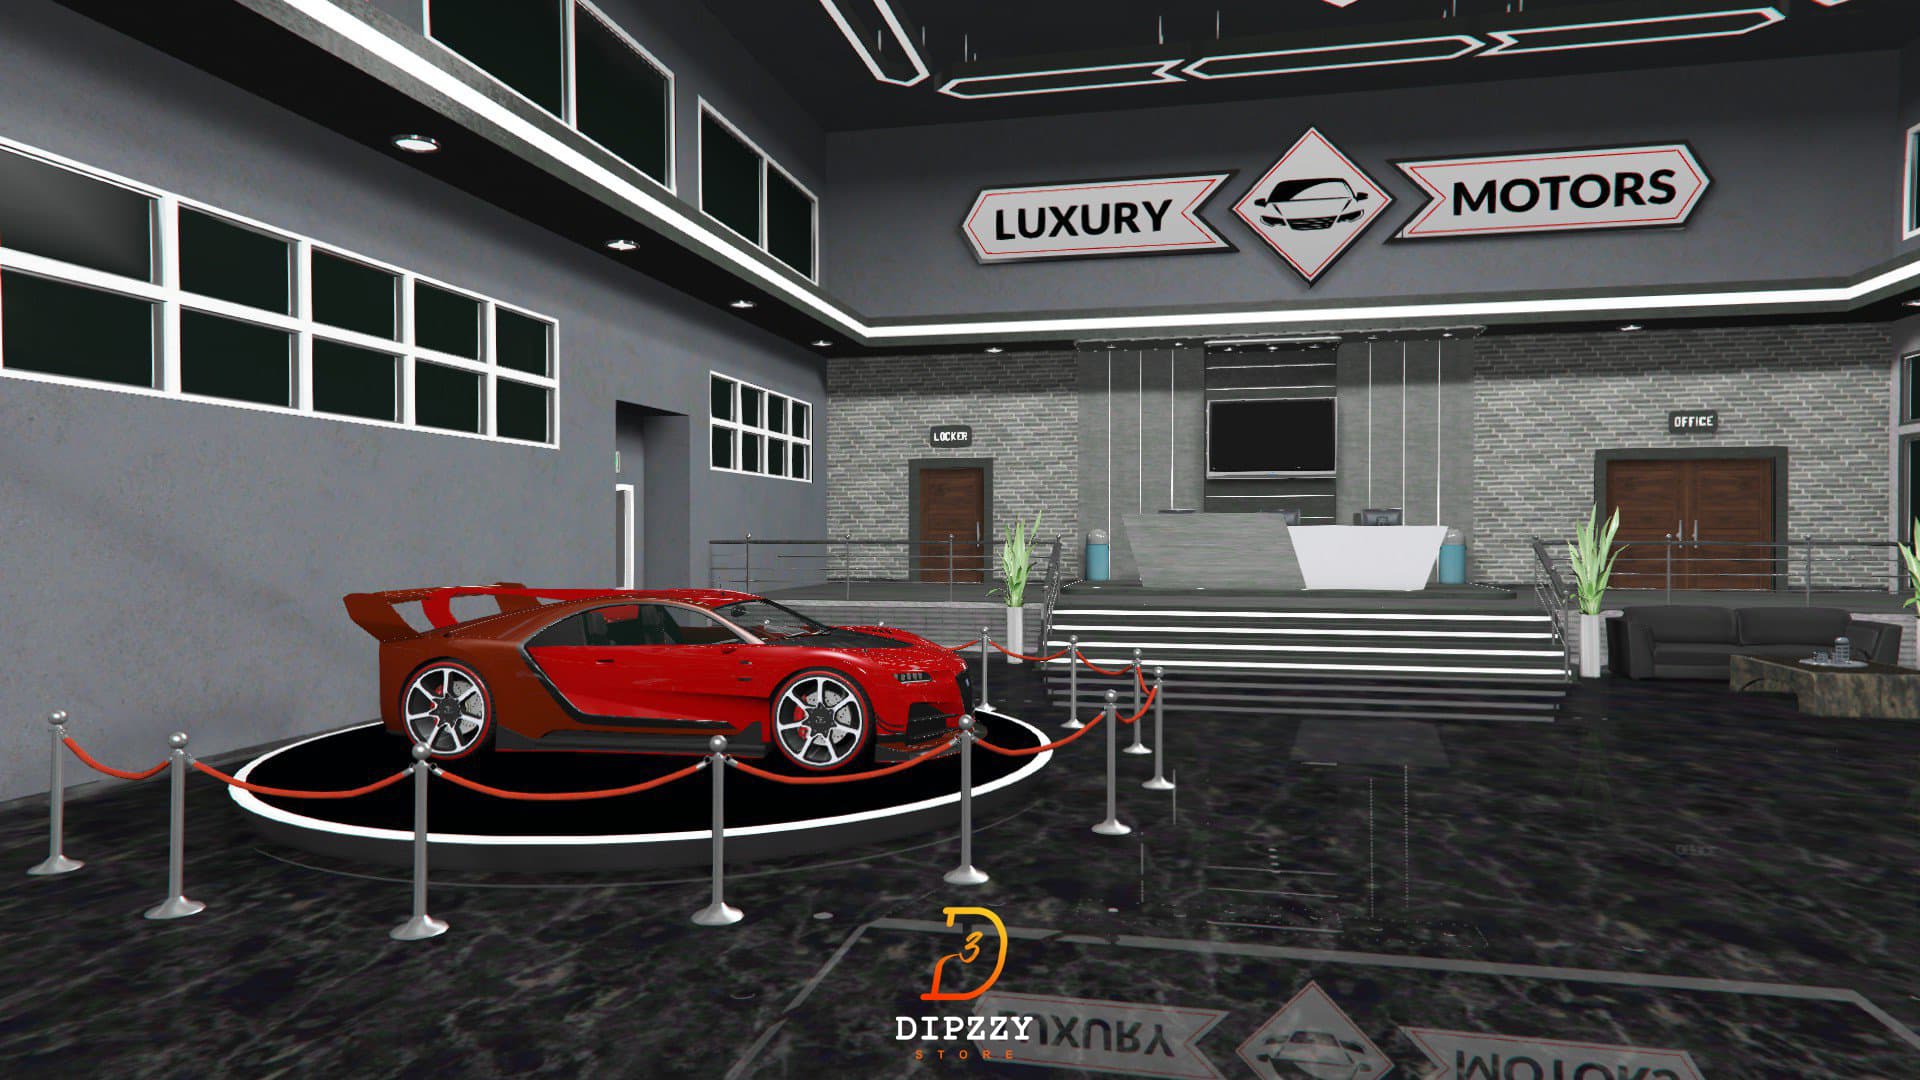 PAID Luxury Car Dealer MLO Releases Cfx re Community